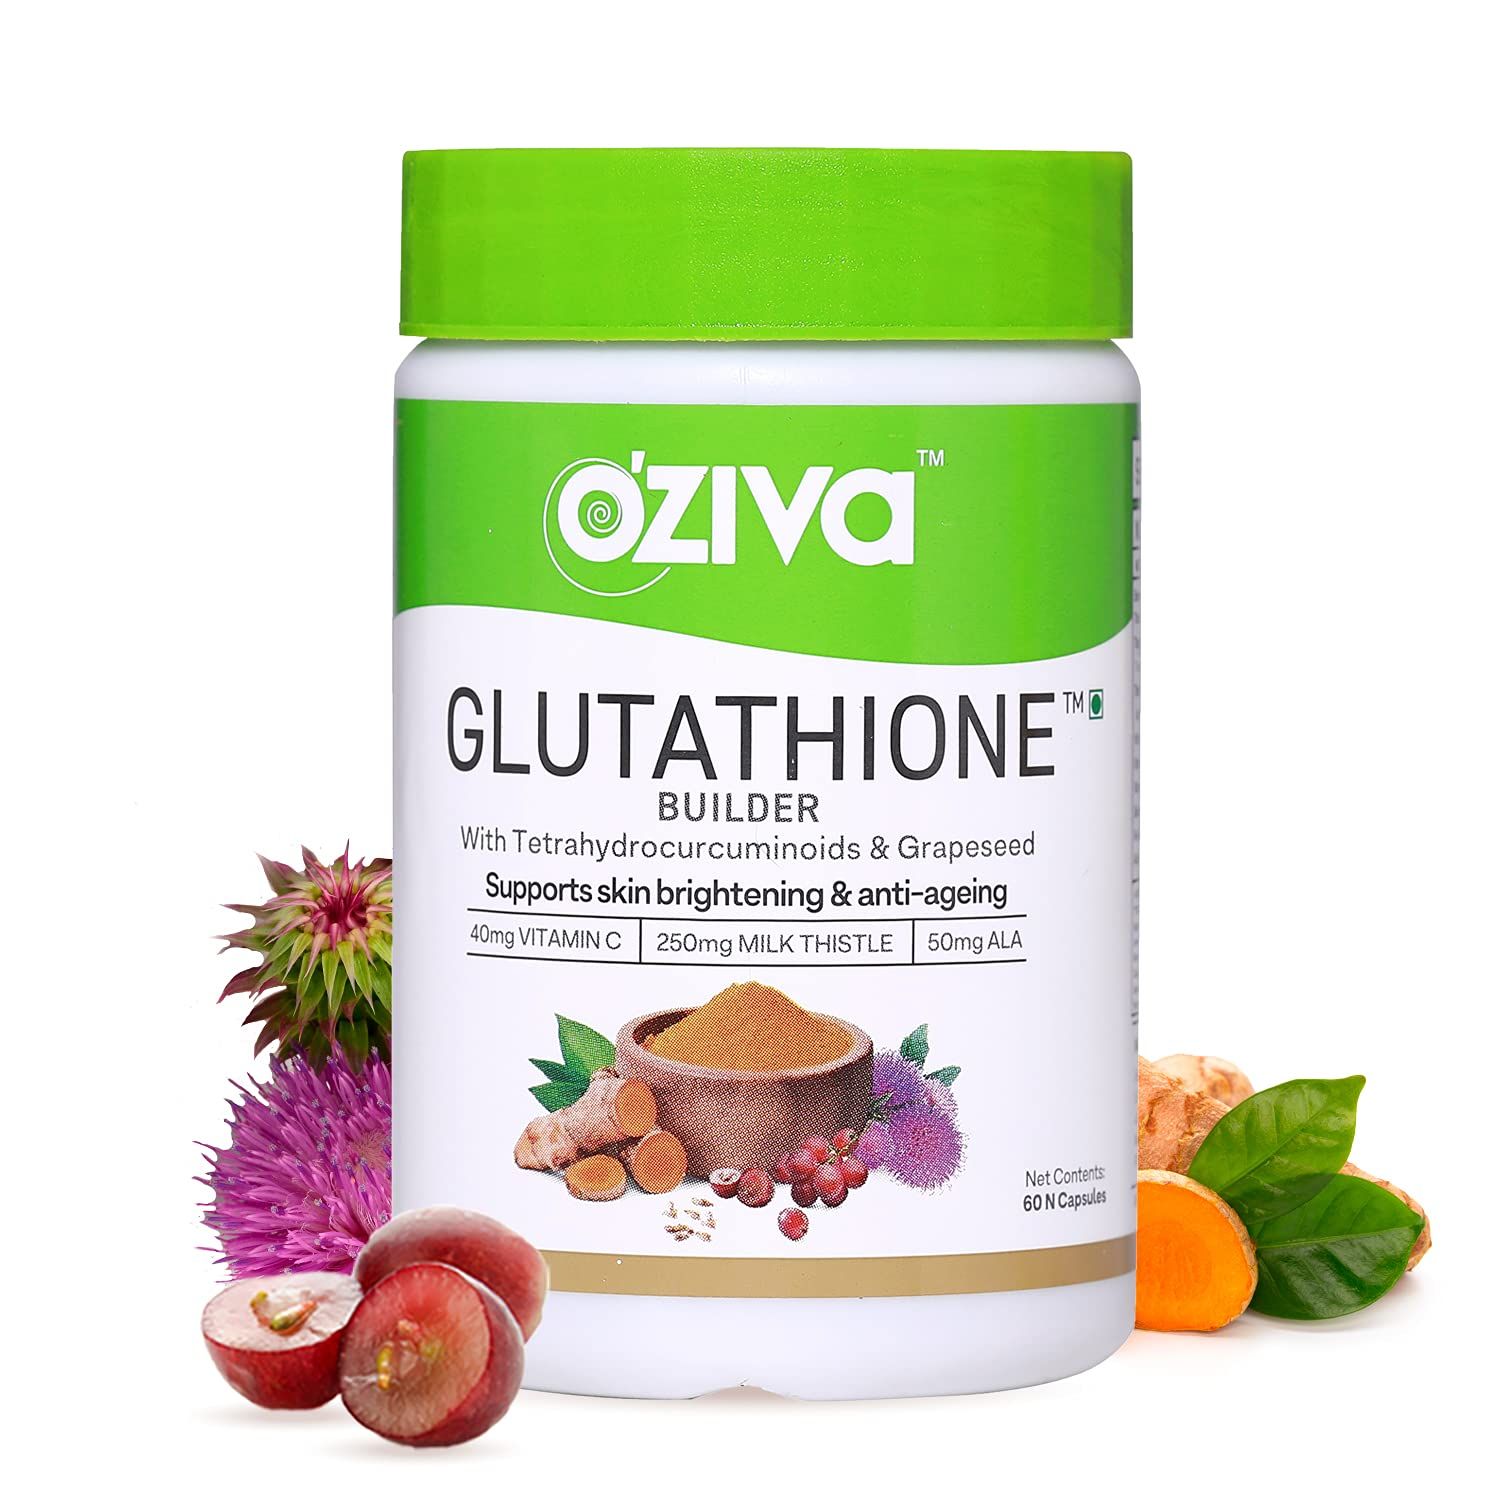 OZiva Glutathione Builder Image